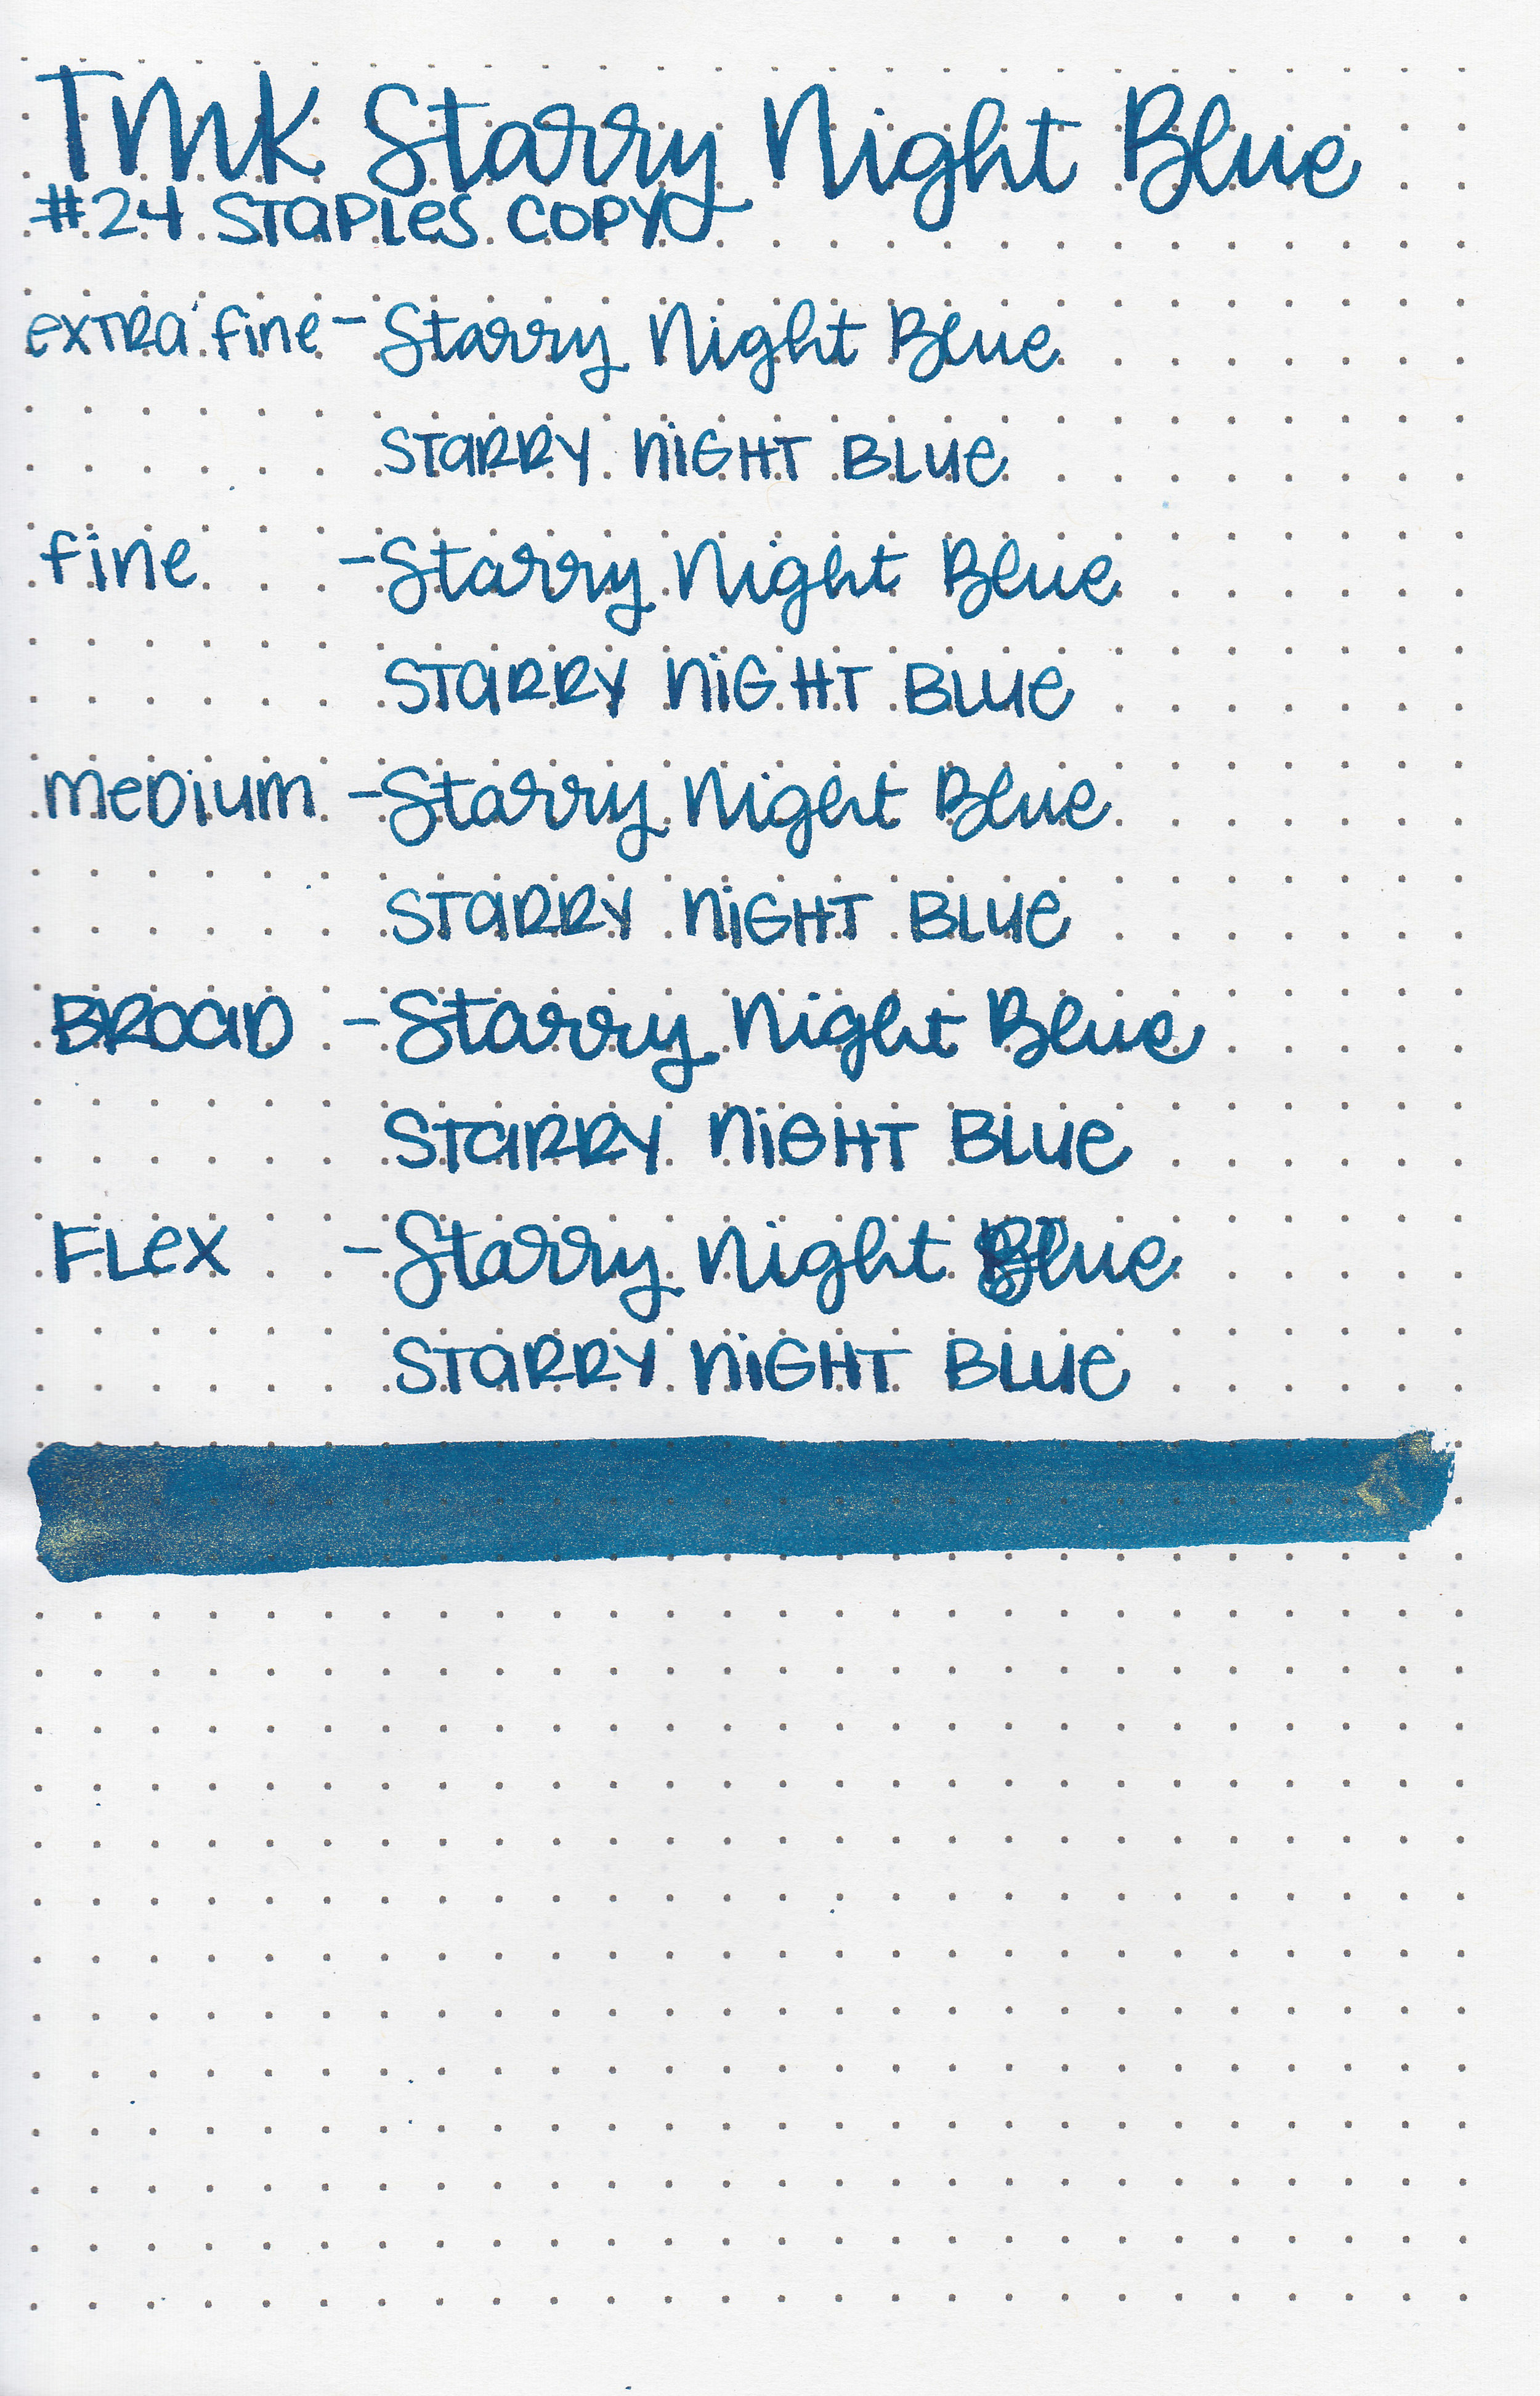 tbm-starry-night-blue-11.jpg